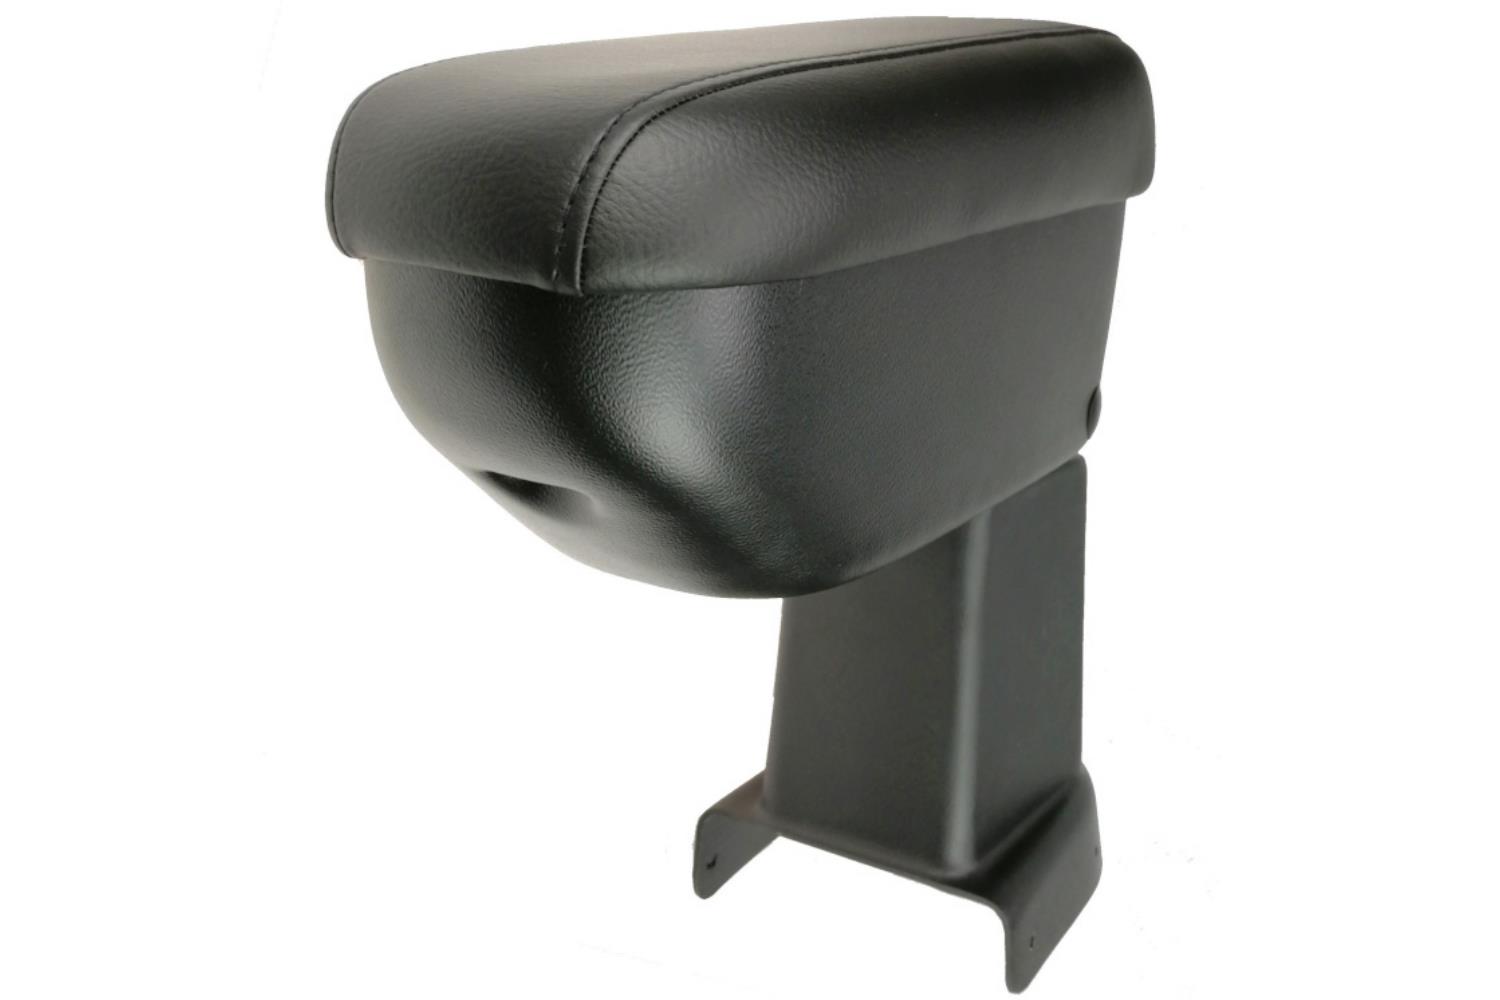 https://www.carparts-expert.com/images/stories/virtuemart/product/kia6piar-kia-picanto-ja-2017-5-door-hatchback-armrest-basic-1.jpg